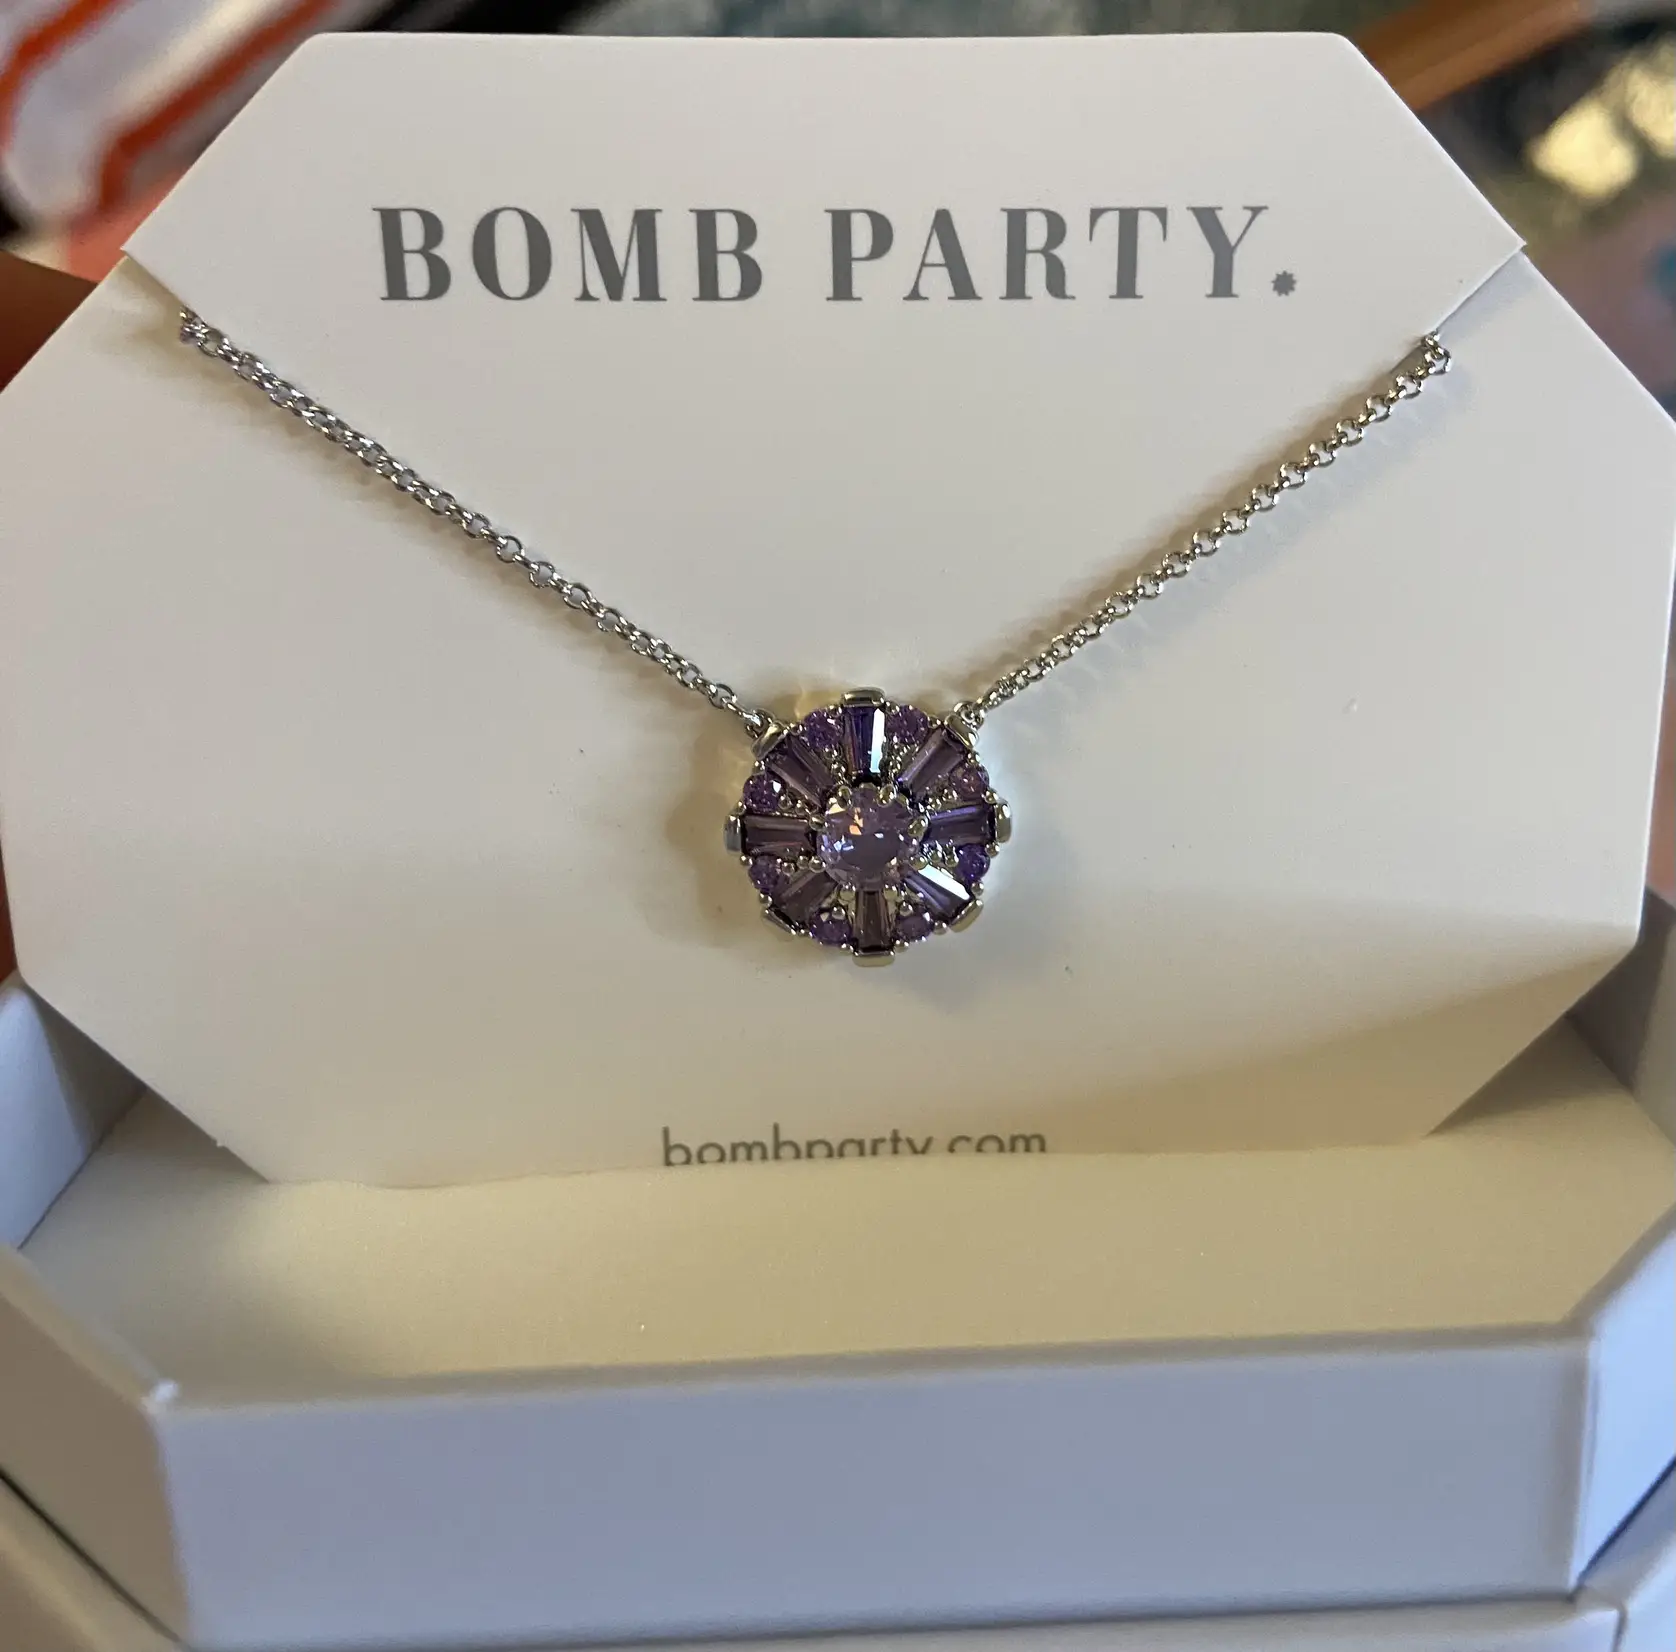 bomb party, Jewelry, Bomb Party Blue Quartz Necklace